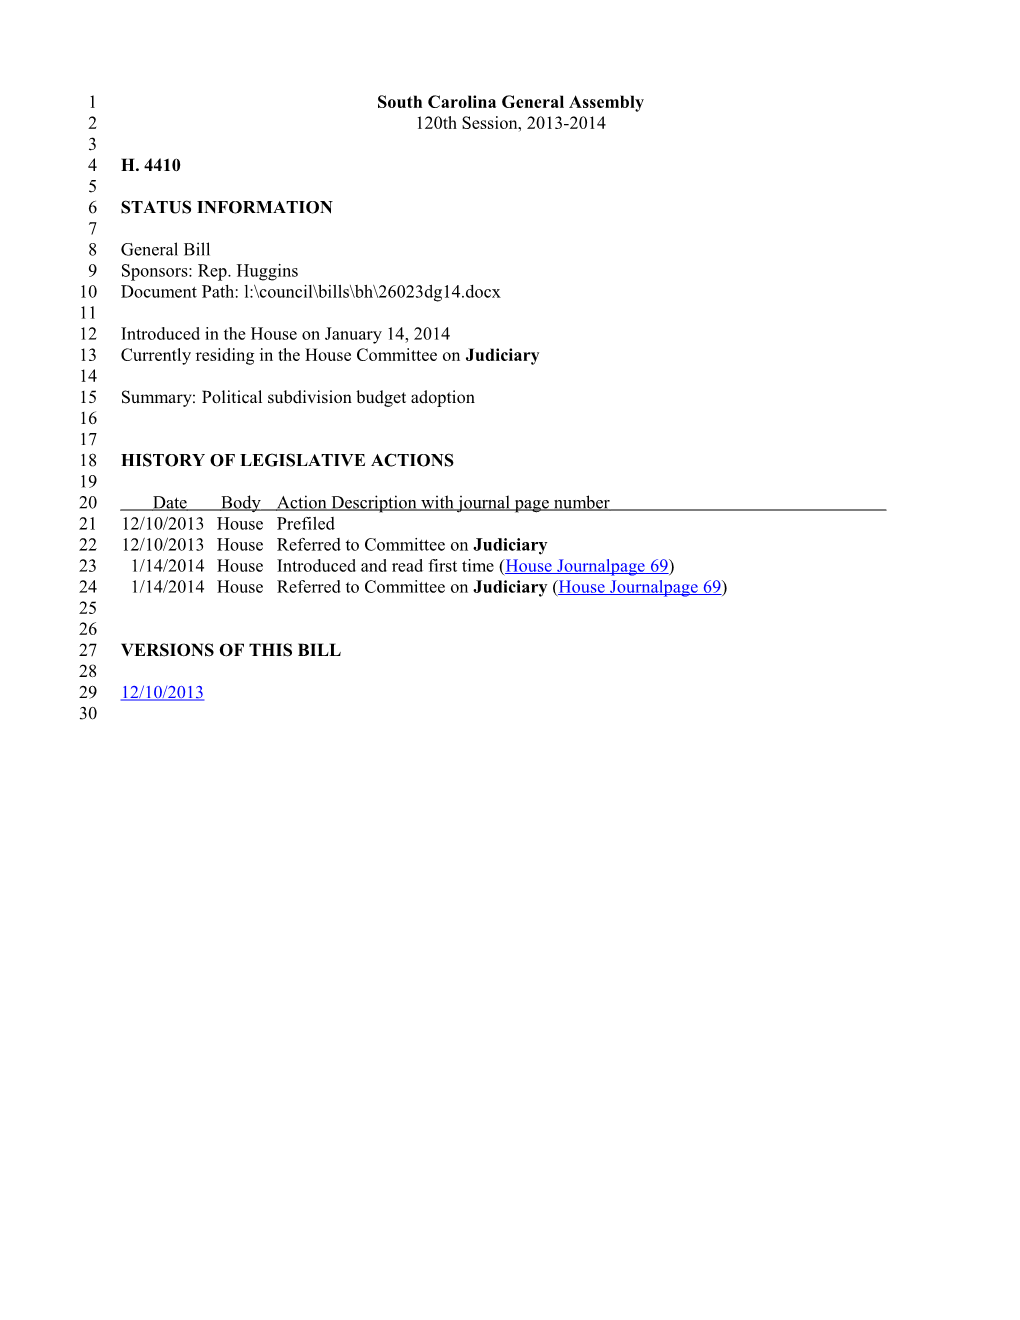 2013-2014 Bill 4410: Political Subdivision Budget Adoption - South Carolina Legislature Online